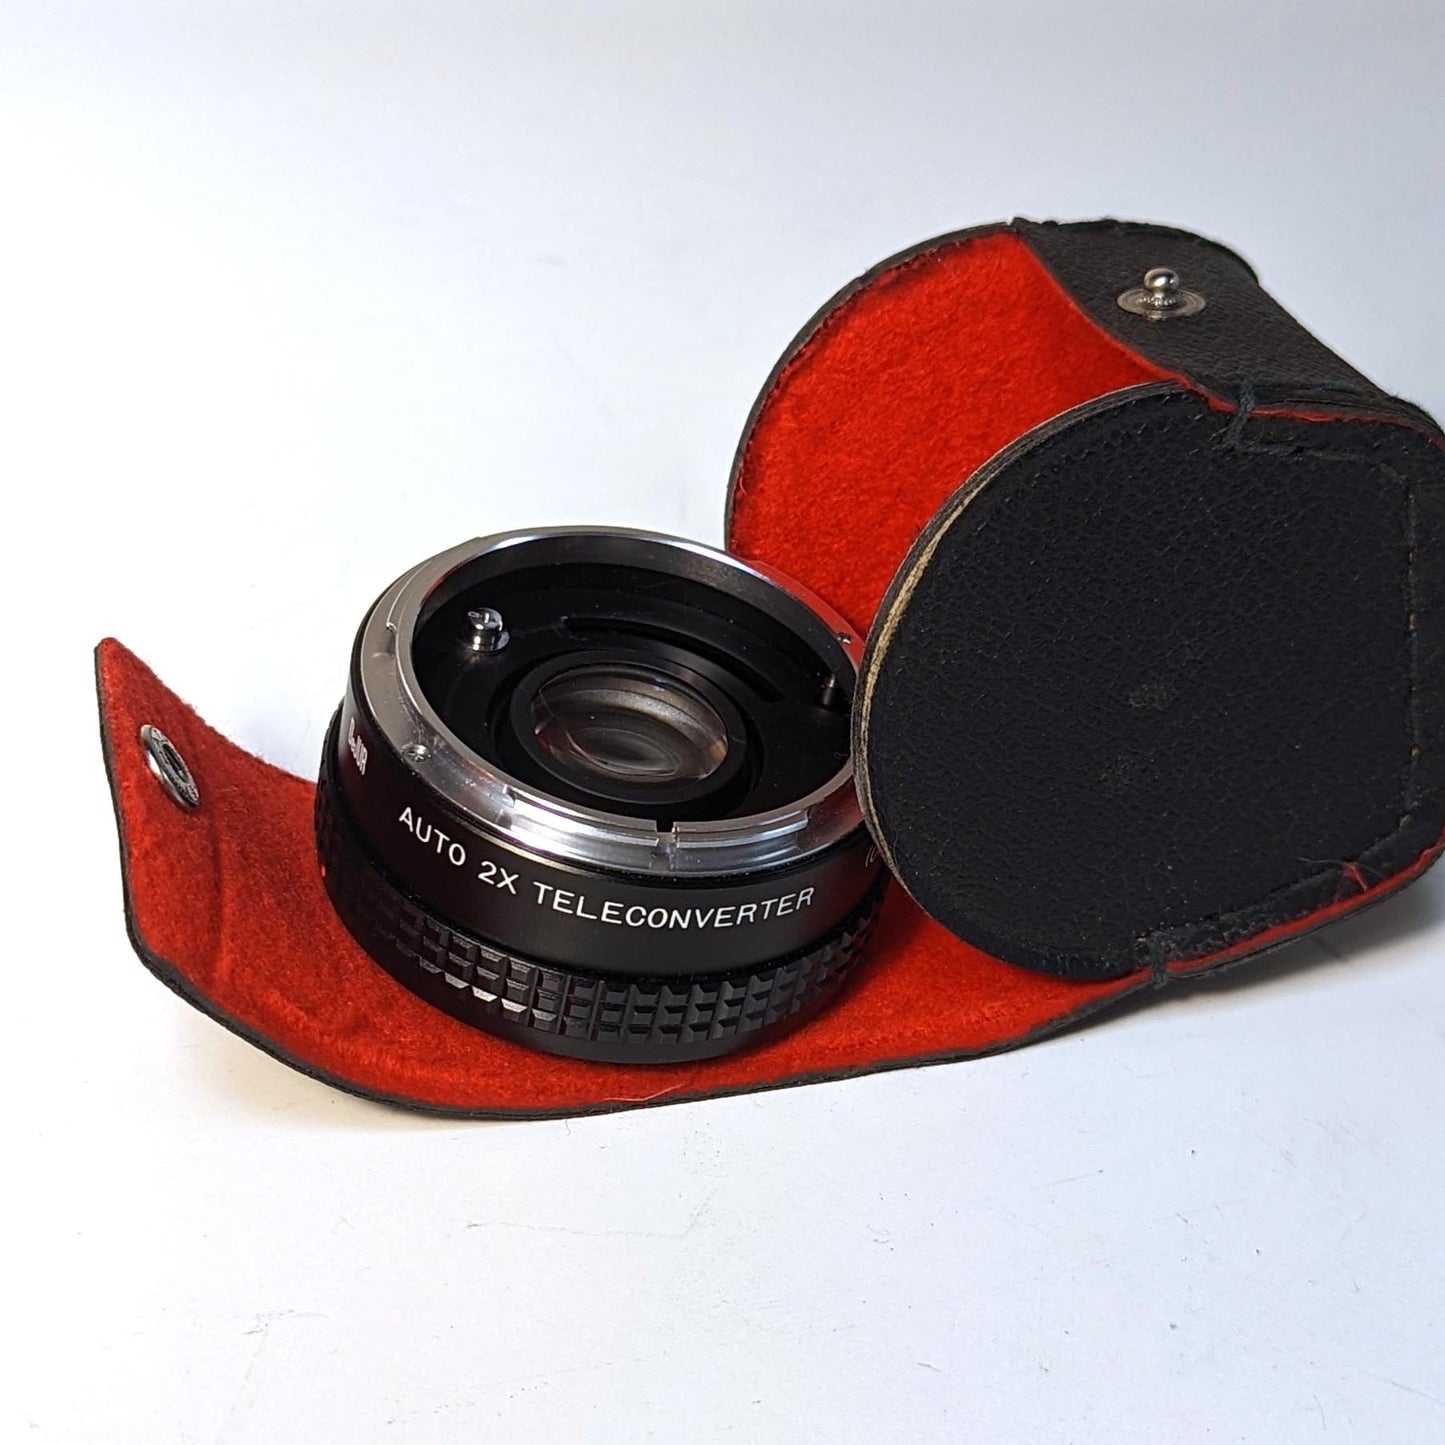 Vintage DEJUR AUTO 2X Teleconverter (CA) Lens Made in JAPAN